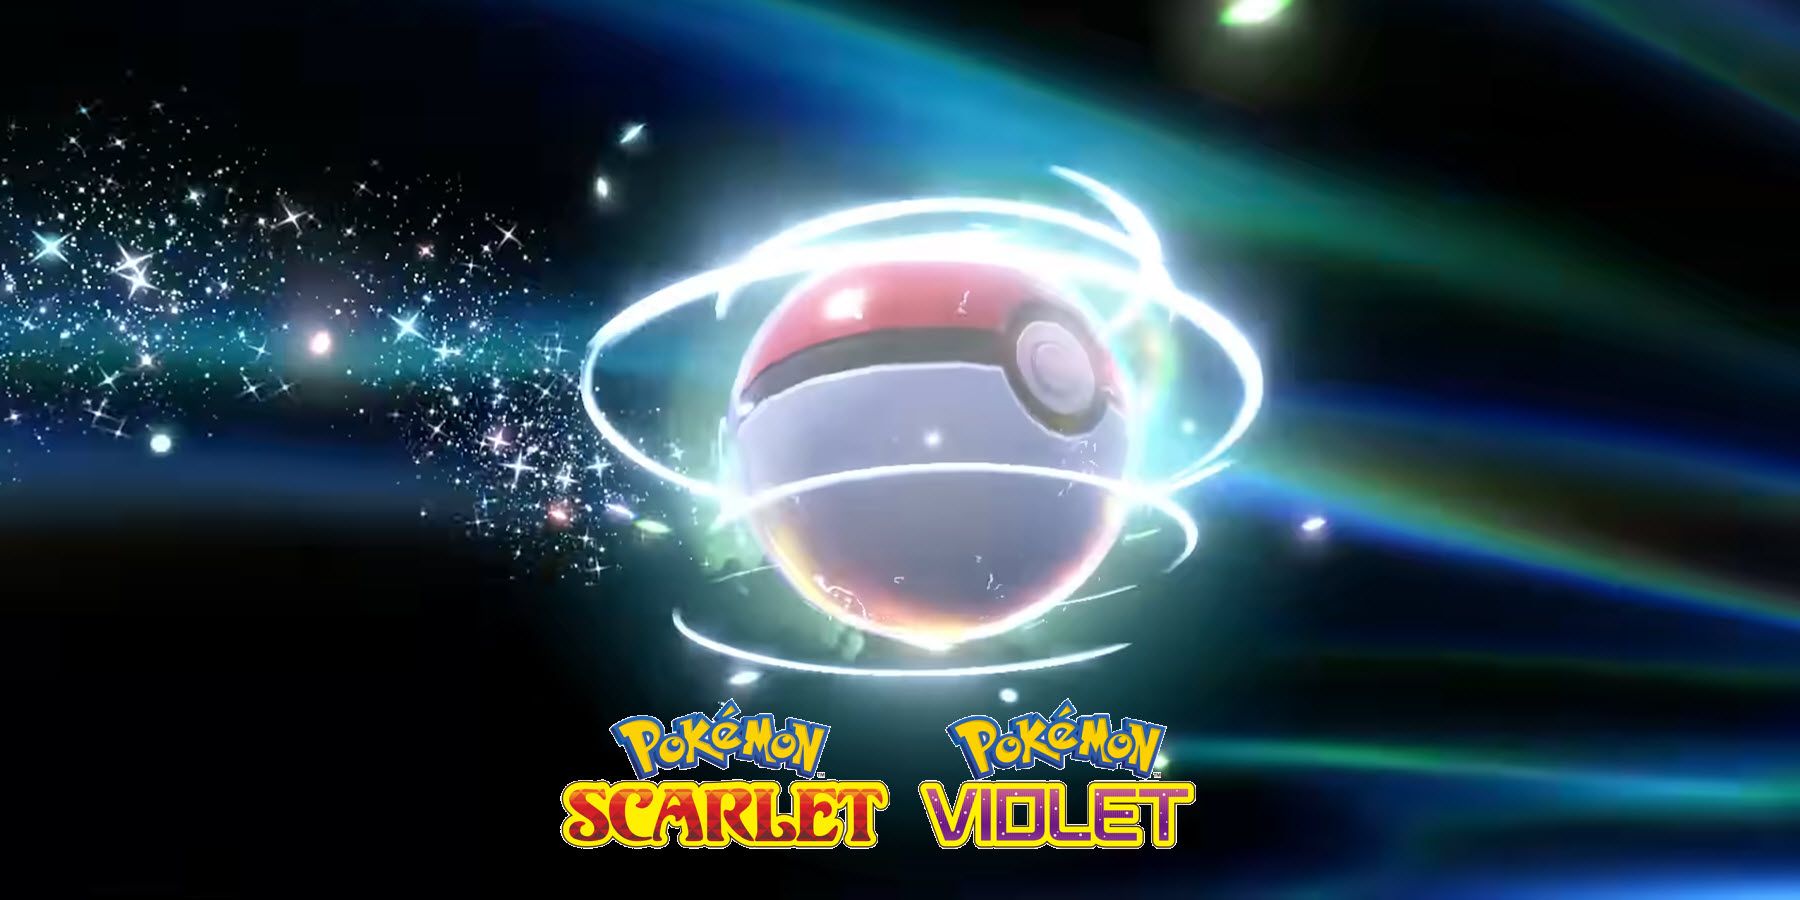 Pokemon Scarlet and Pokemon Violet 7 Star Raids - Hold To Reset